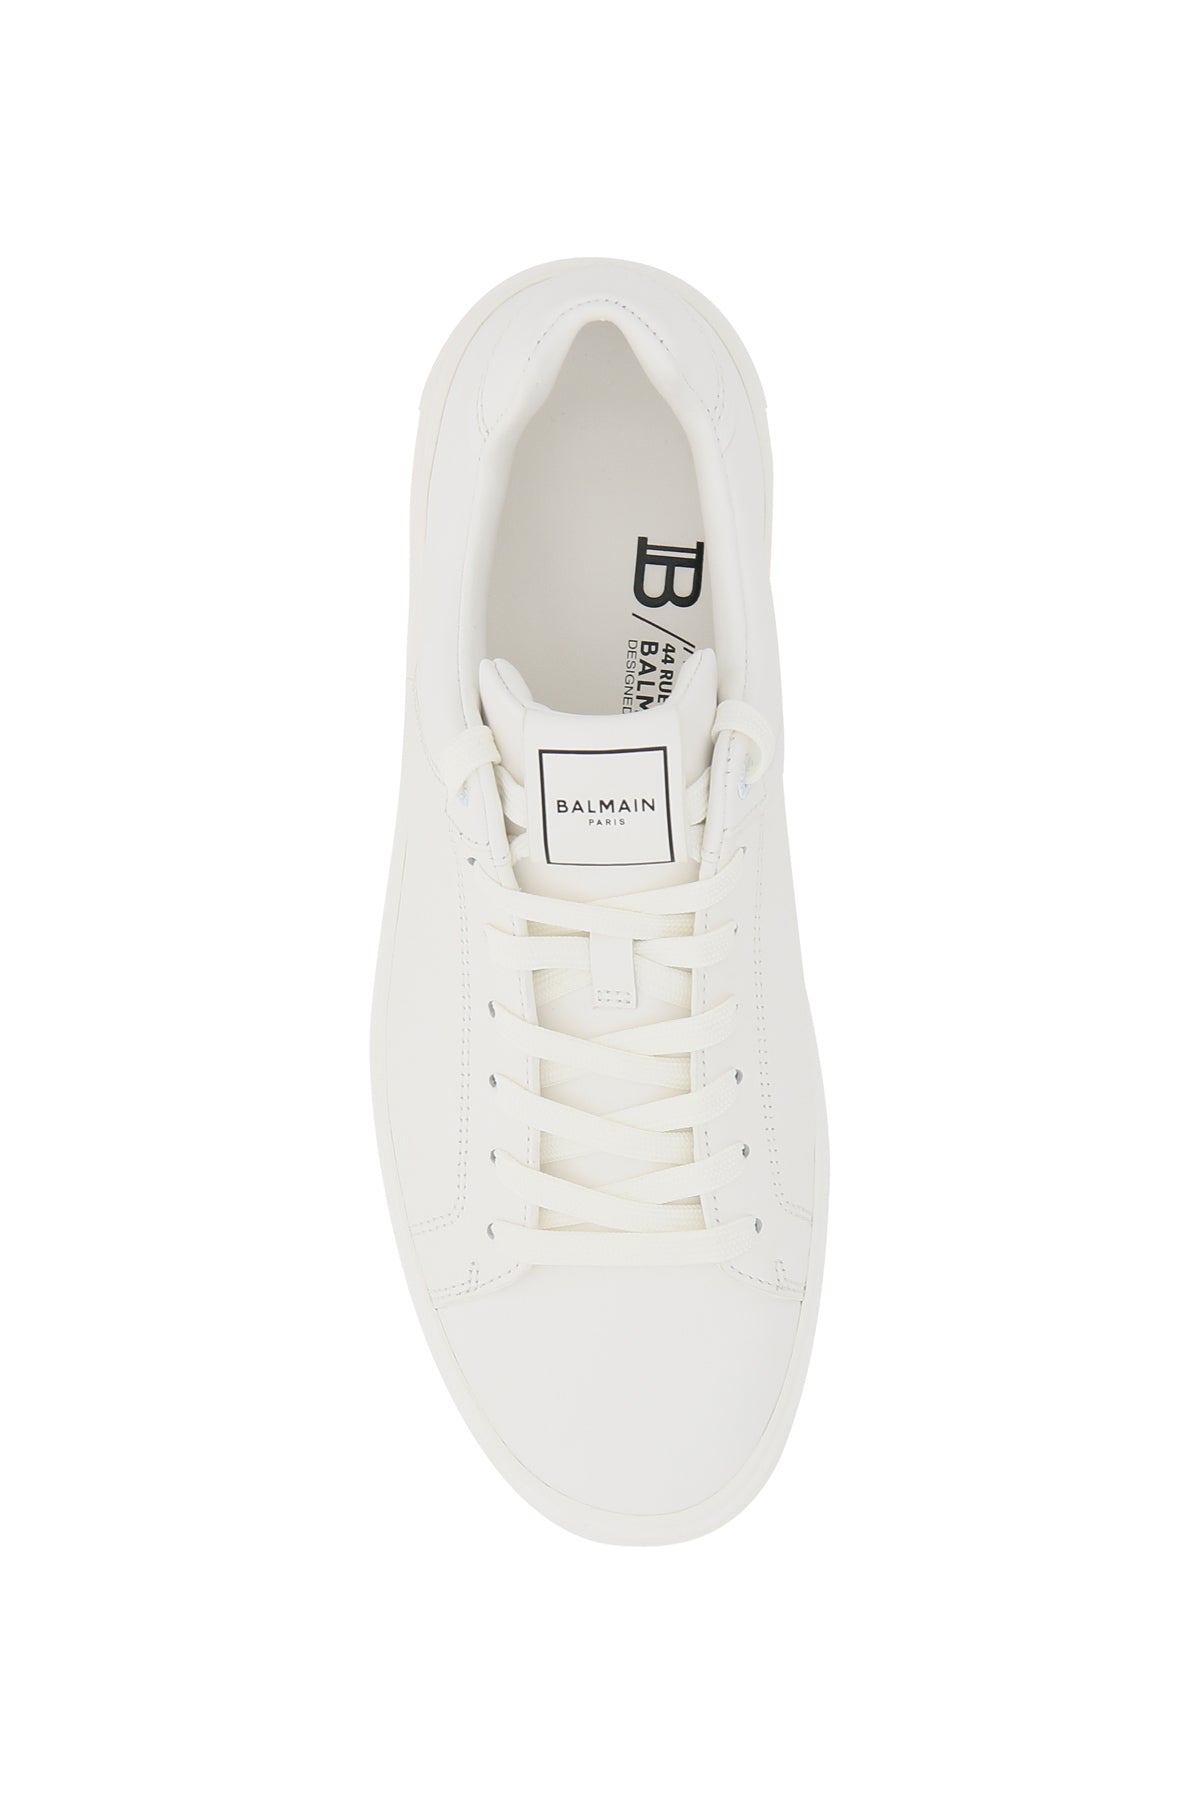 Balmain B-Court Smooth Leather Sneakers White